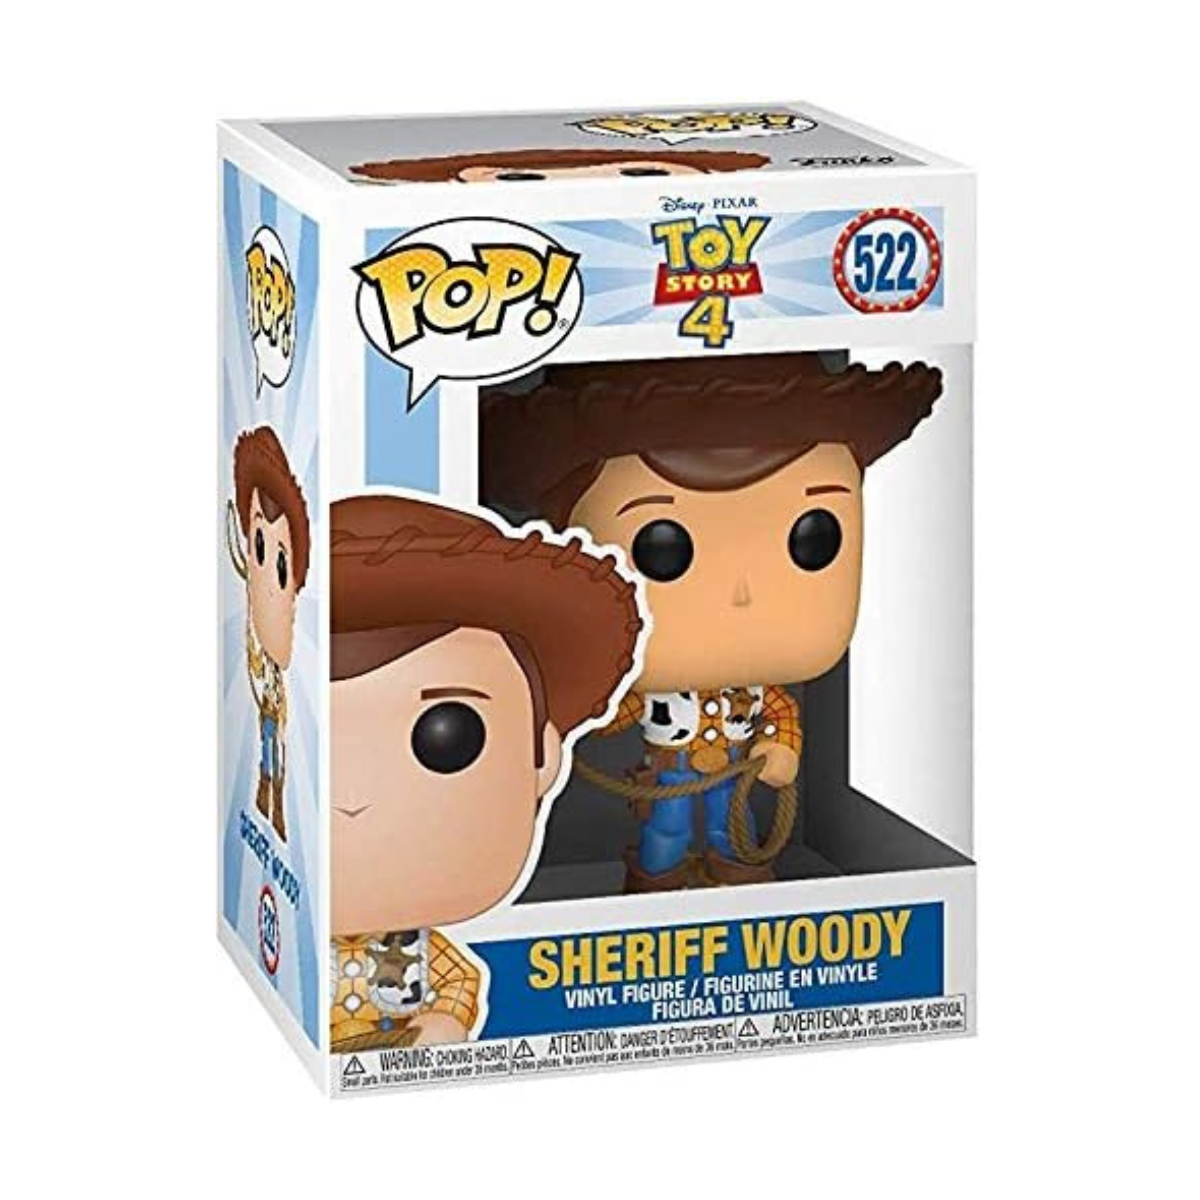 FUNKO POP!: Disney: Sheriff Woody Pop Vinyl Figure (Toy Story 4)